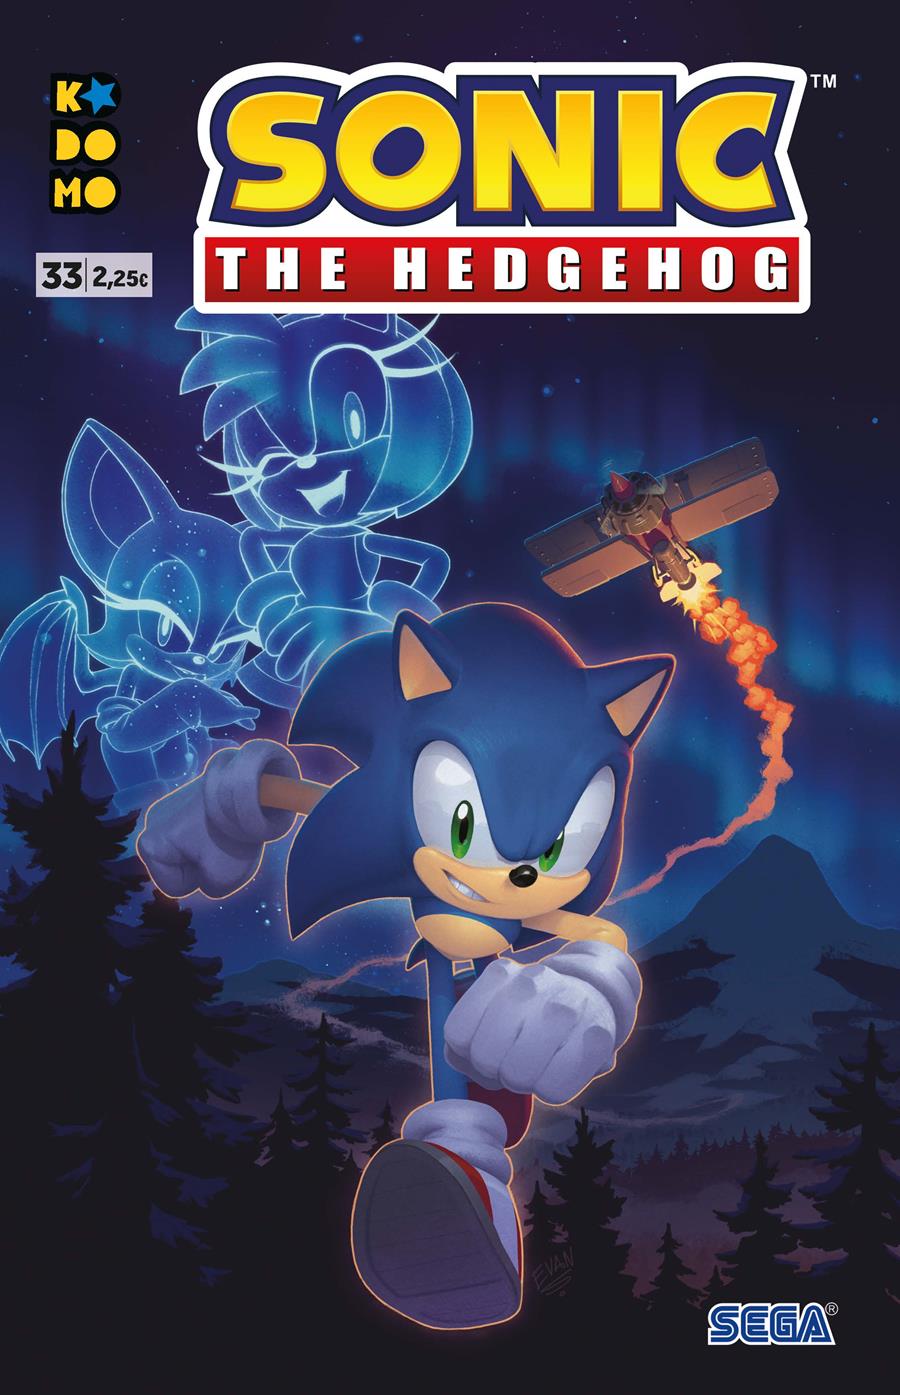 Sonic The Hedgehog núm. 33 | N0422-ECC61 | Evan Stanley / Evan Stanley | Terra de Còmic - Tu tienda de cómics online especializada en cómics, manga y merchandising